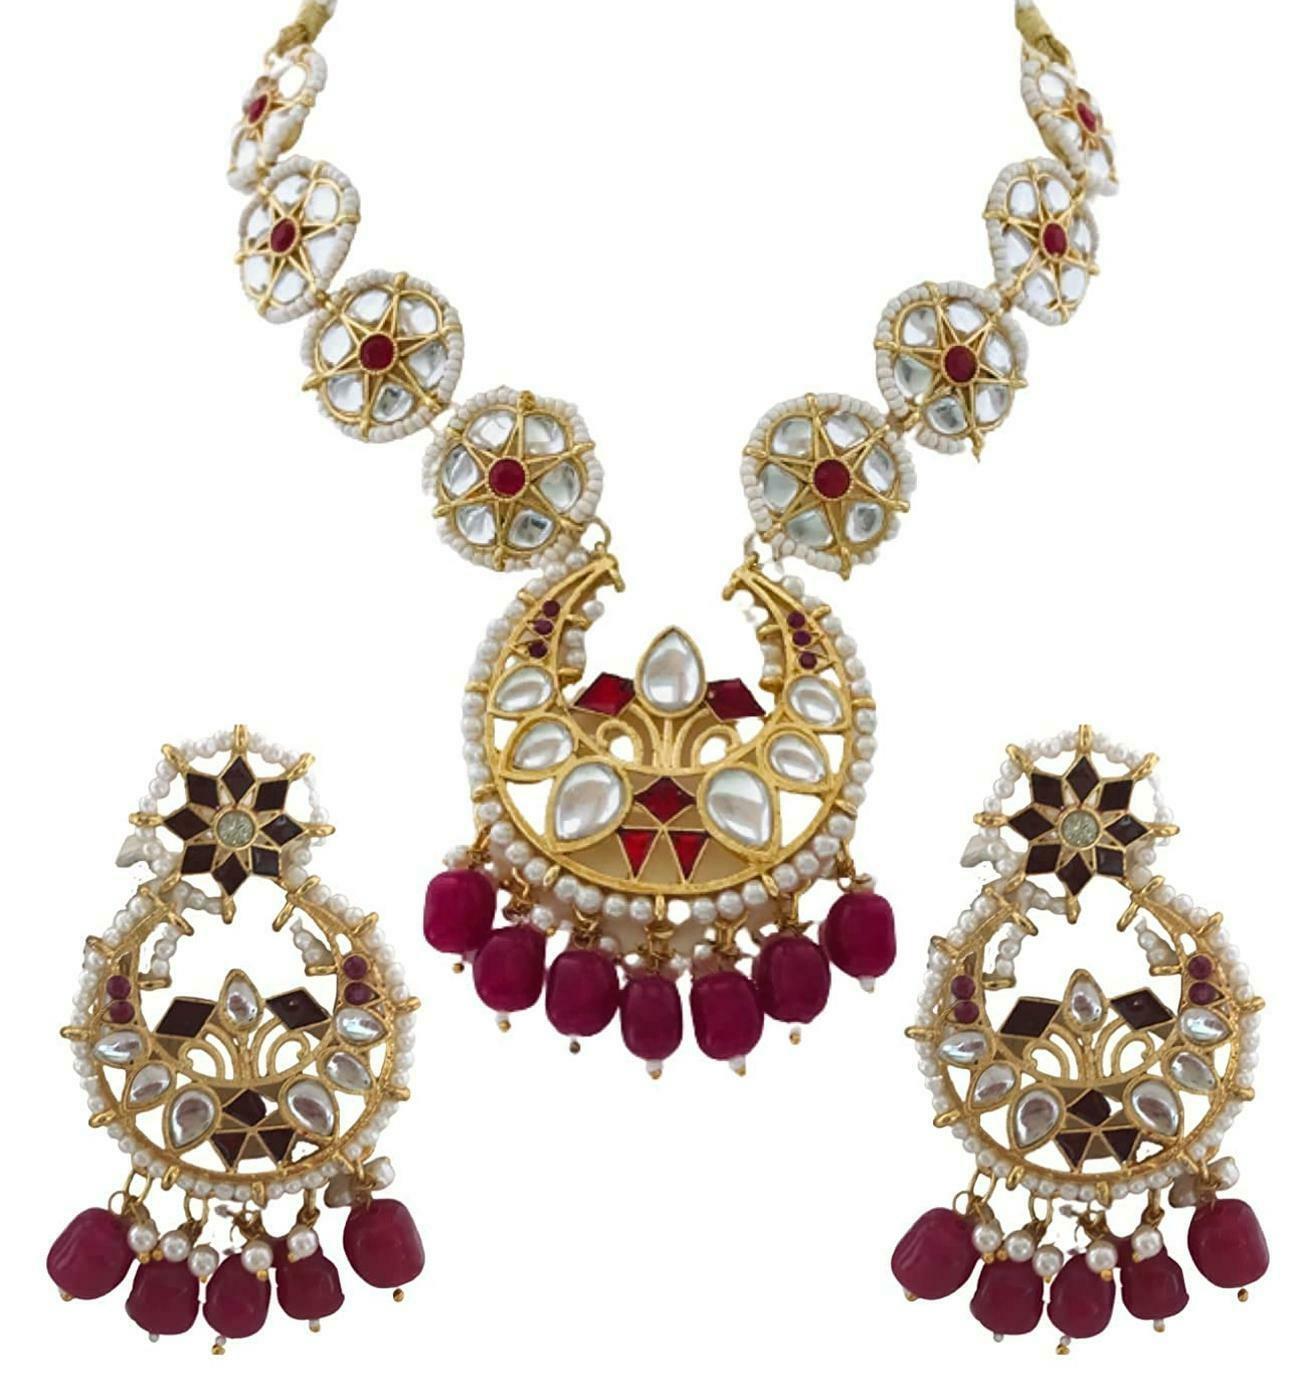 Buy quality Gold Antique Jadtar Necklace Set RHJ 5163 in Ahmedabad